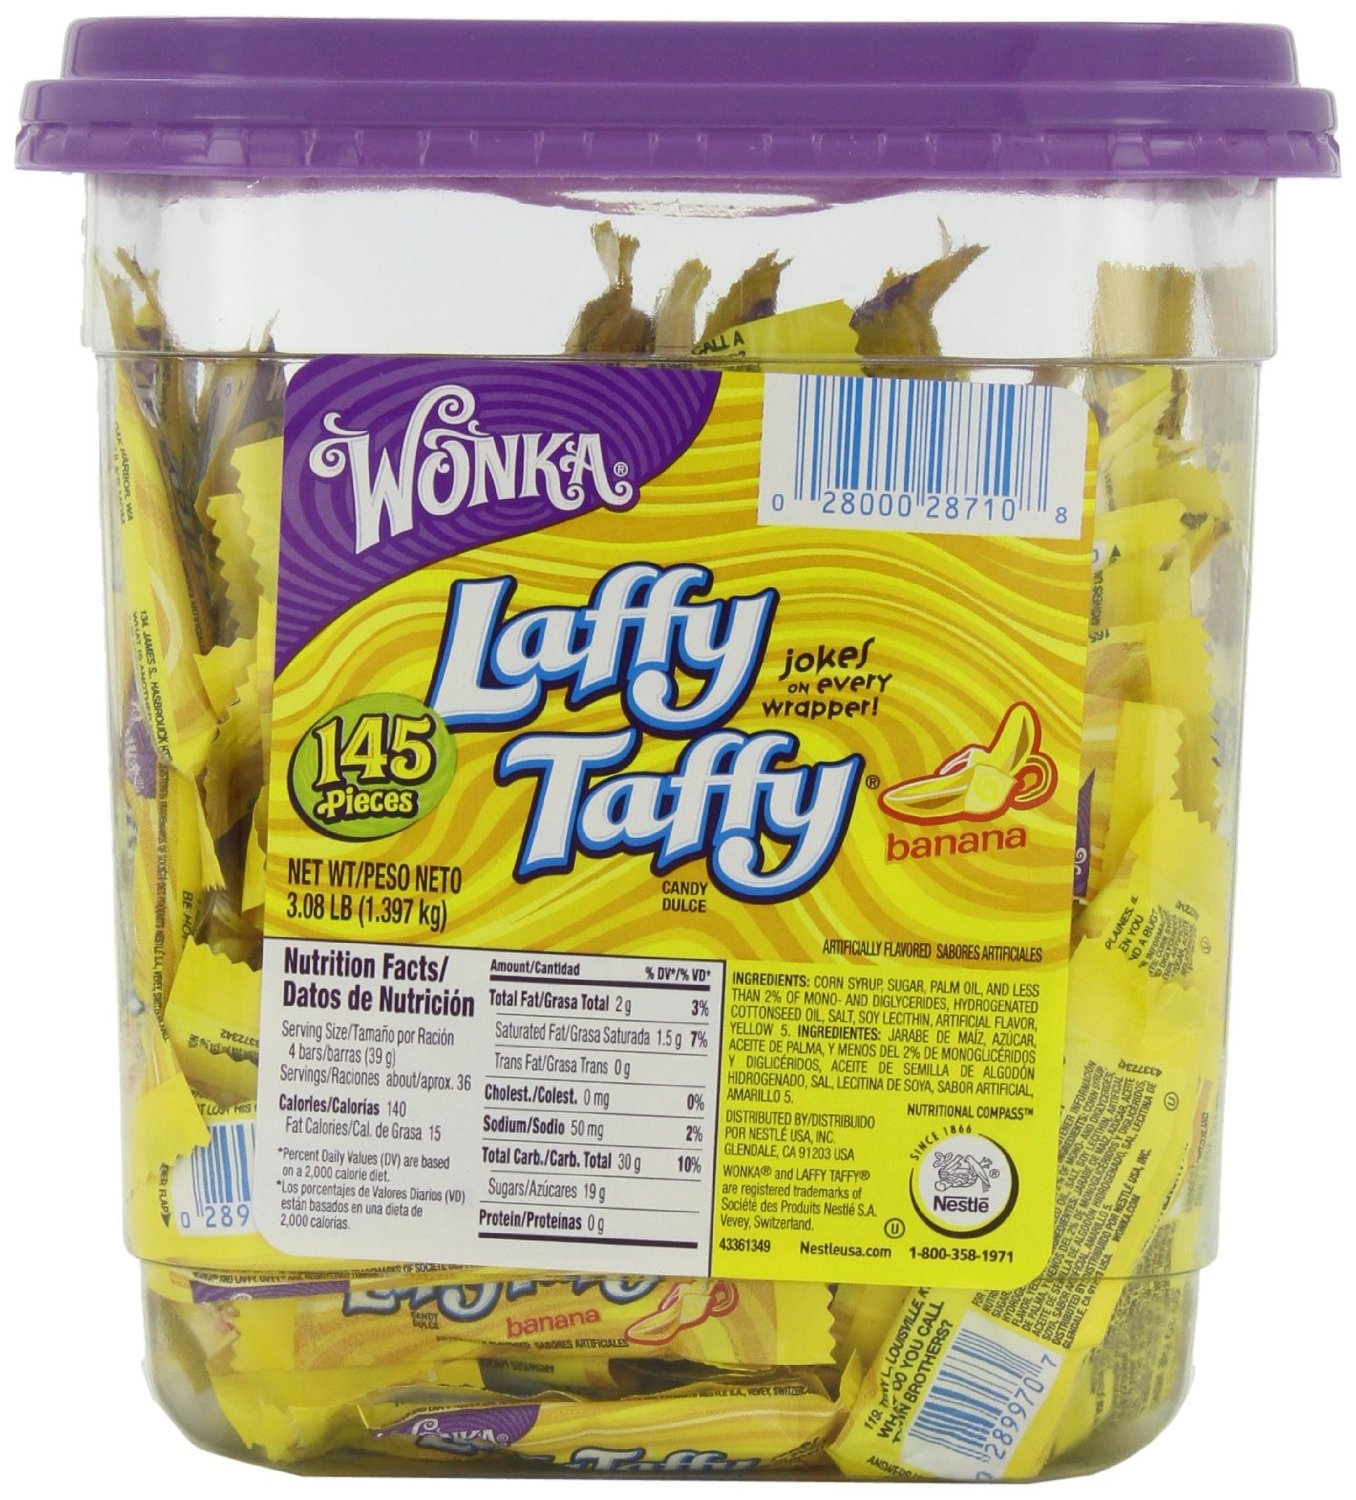 2) Wonka Laffy TaffyJar, Banana, 145-Count